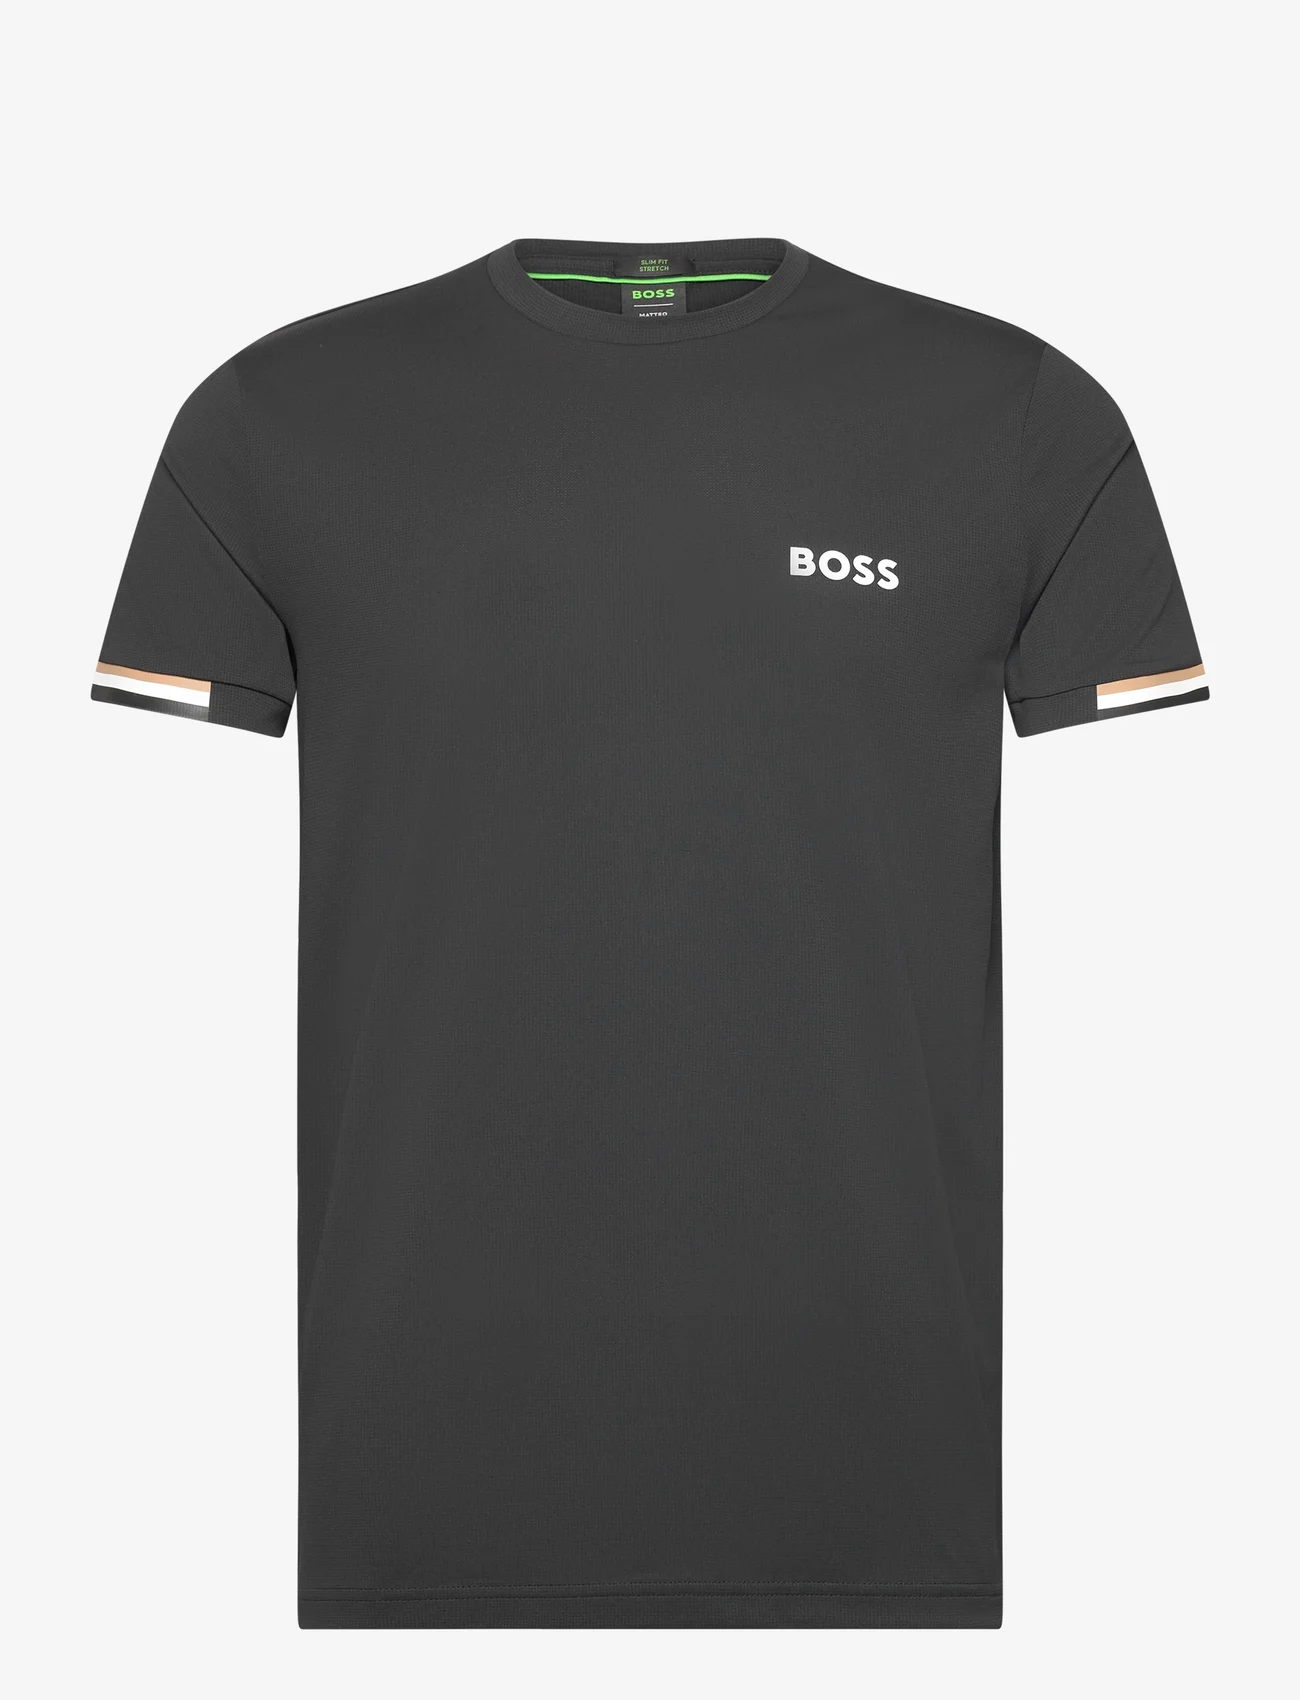 BOSS - Tee MB - tops & t-shirts - black - 0